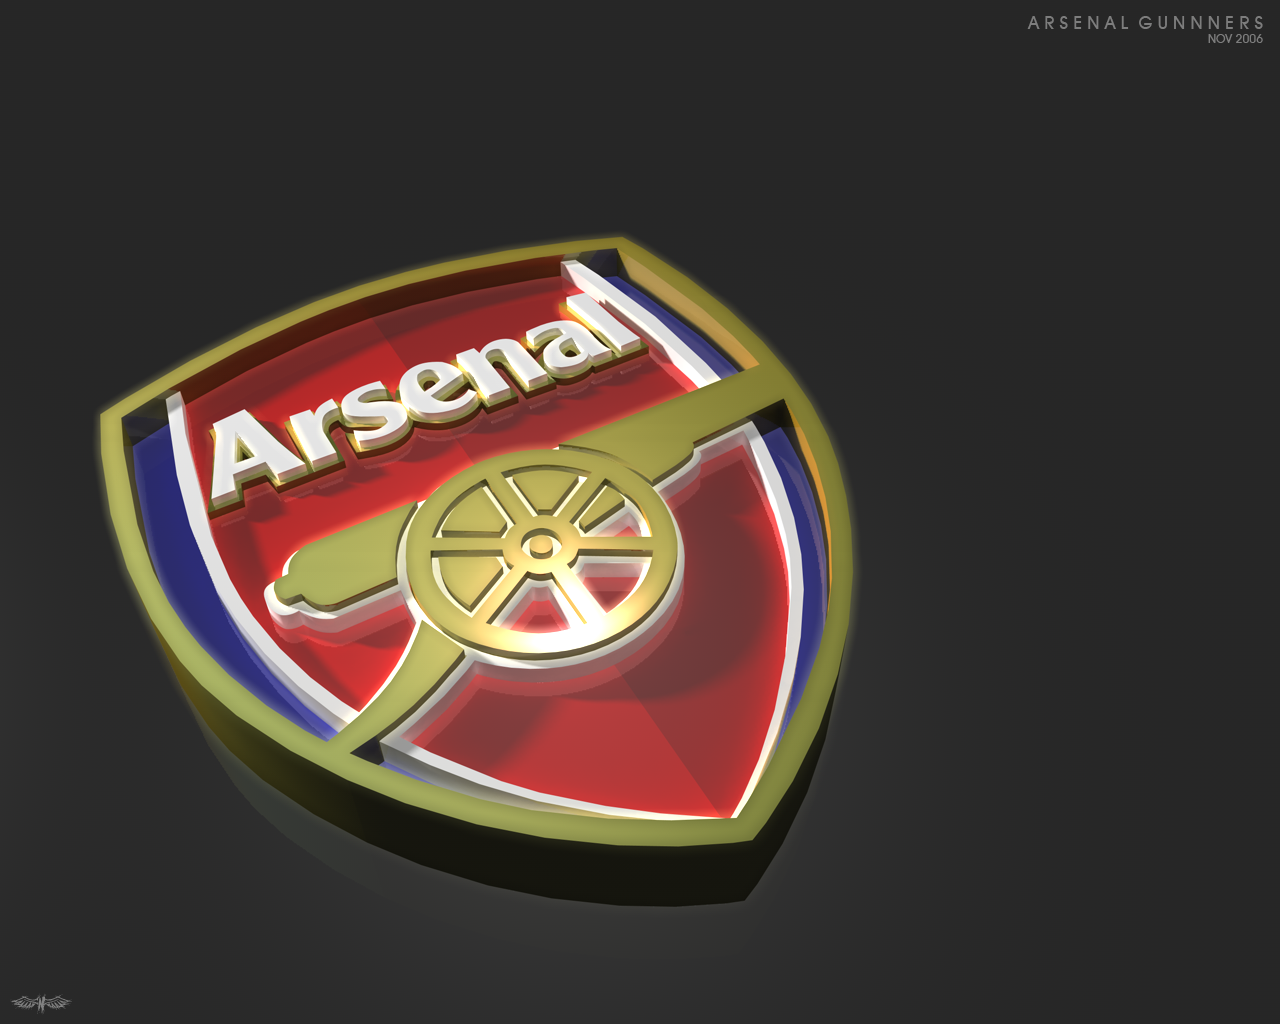 Arsenal Football Club Wallpaper HD Background